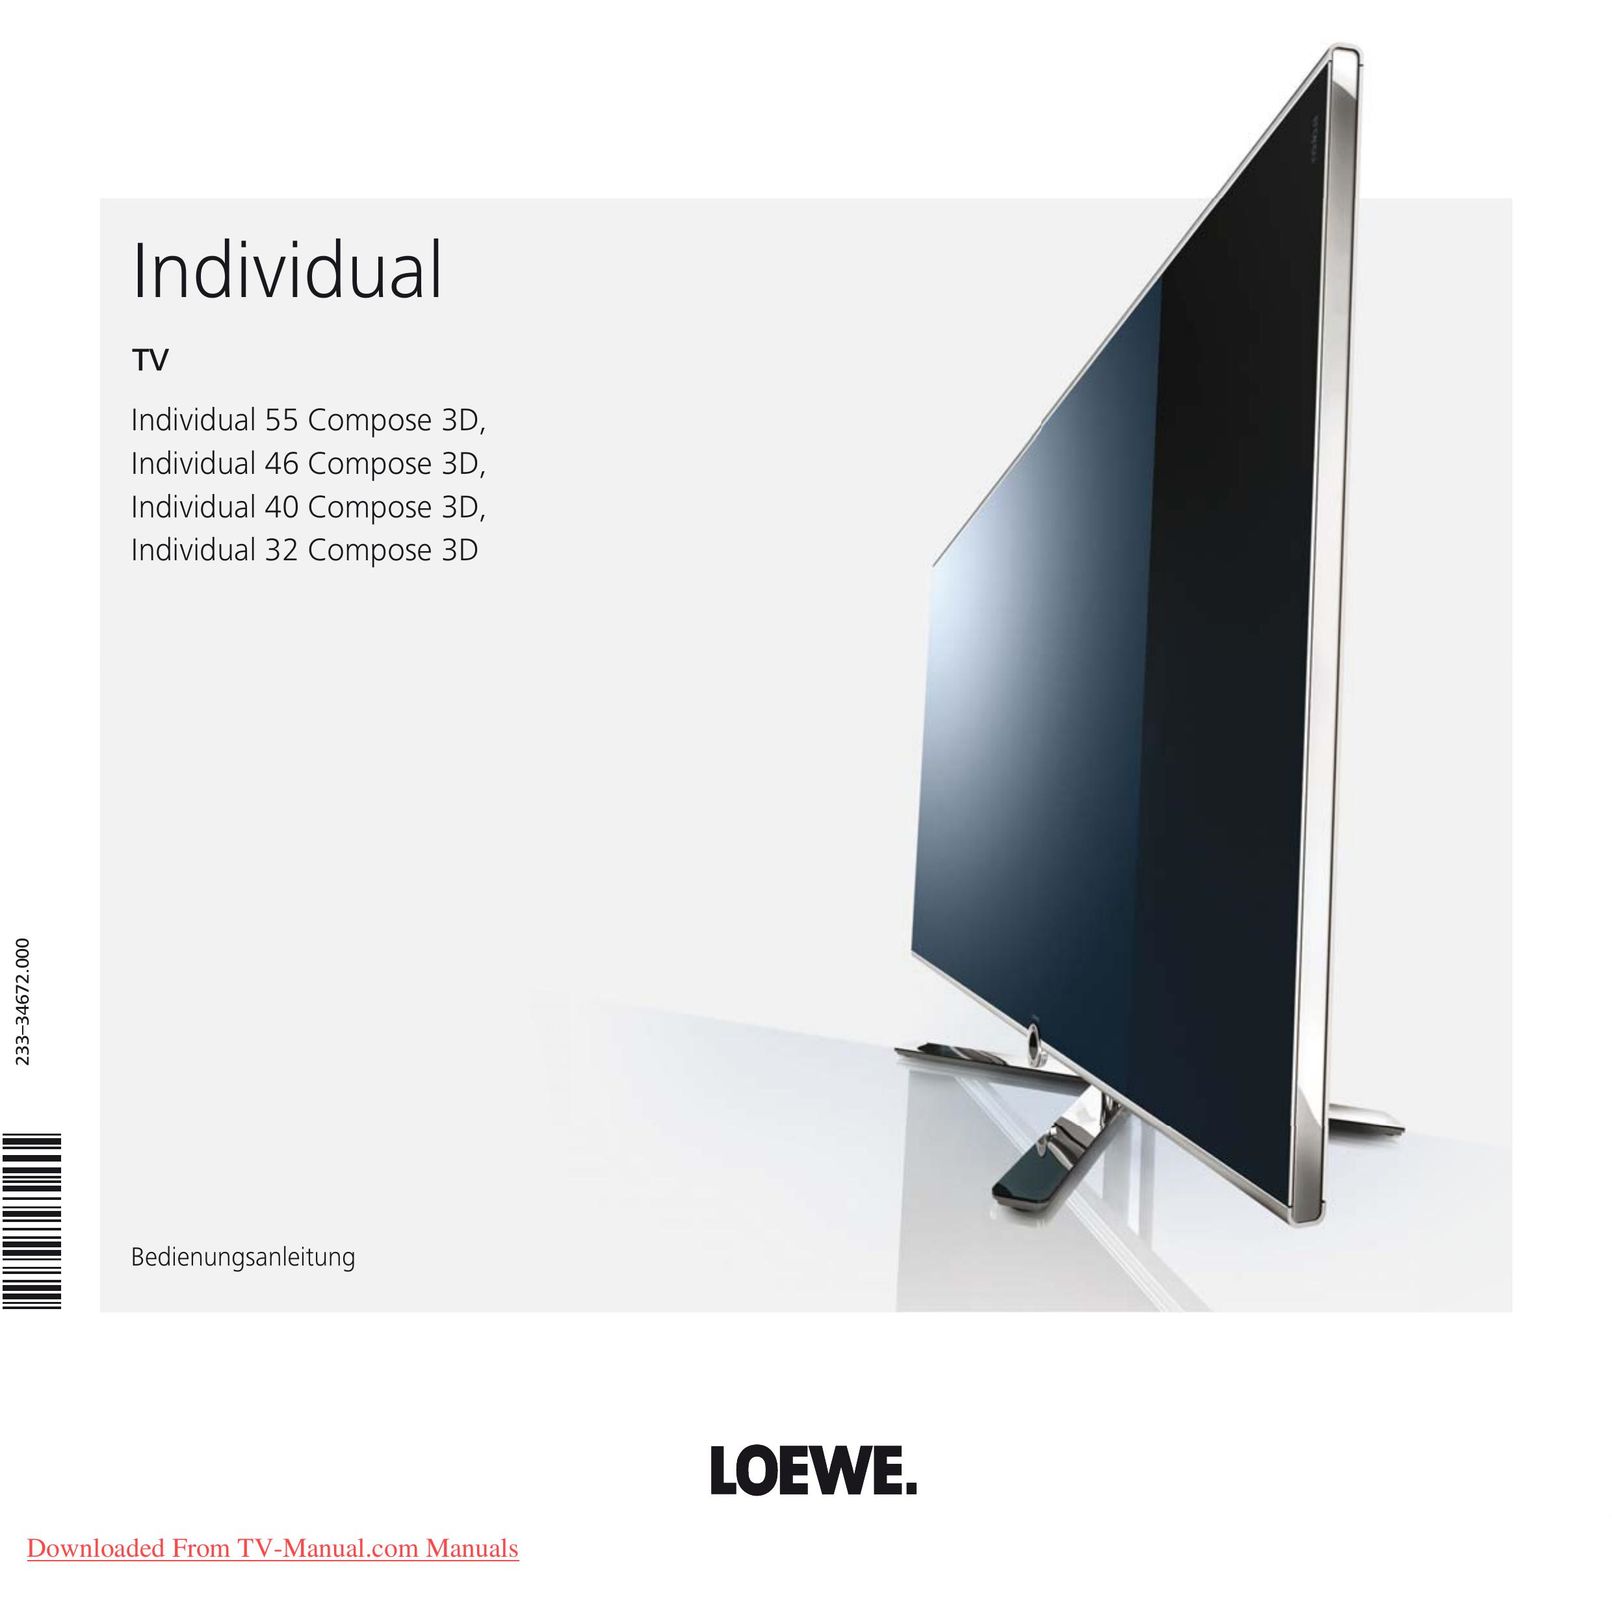 Loewe Individual 32 Compose 3D TV Antenna User Manual